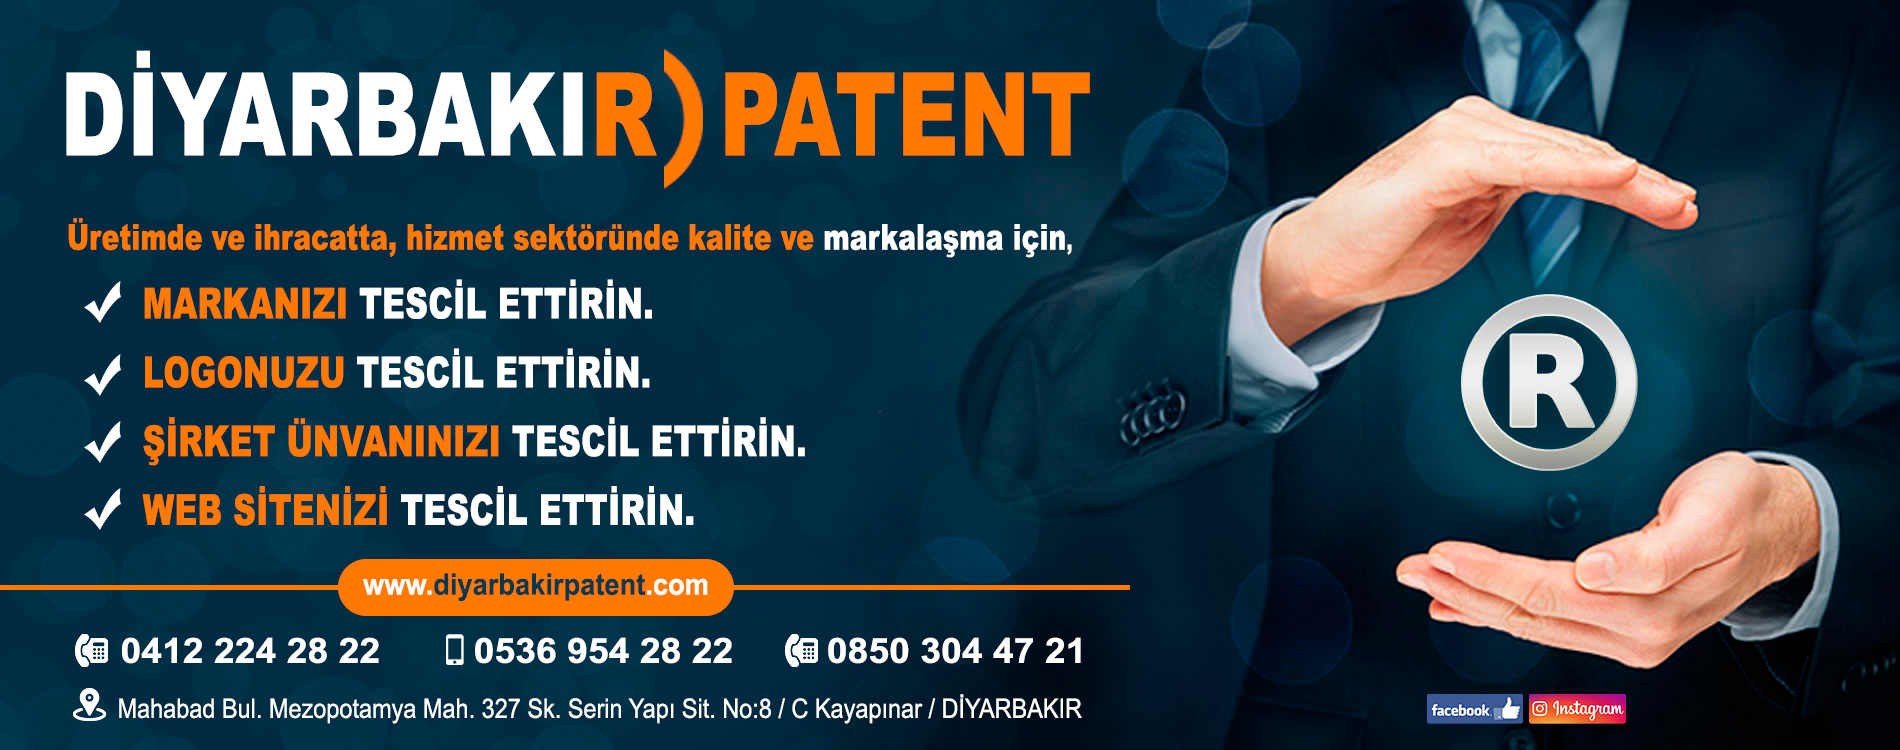 Türk Patent Enstitüsü Tescil İşlemleri